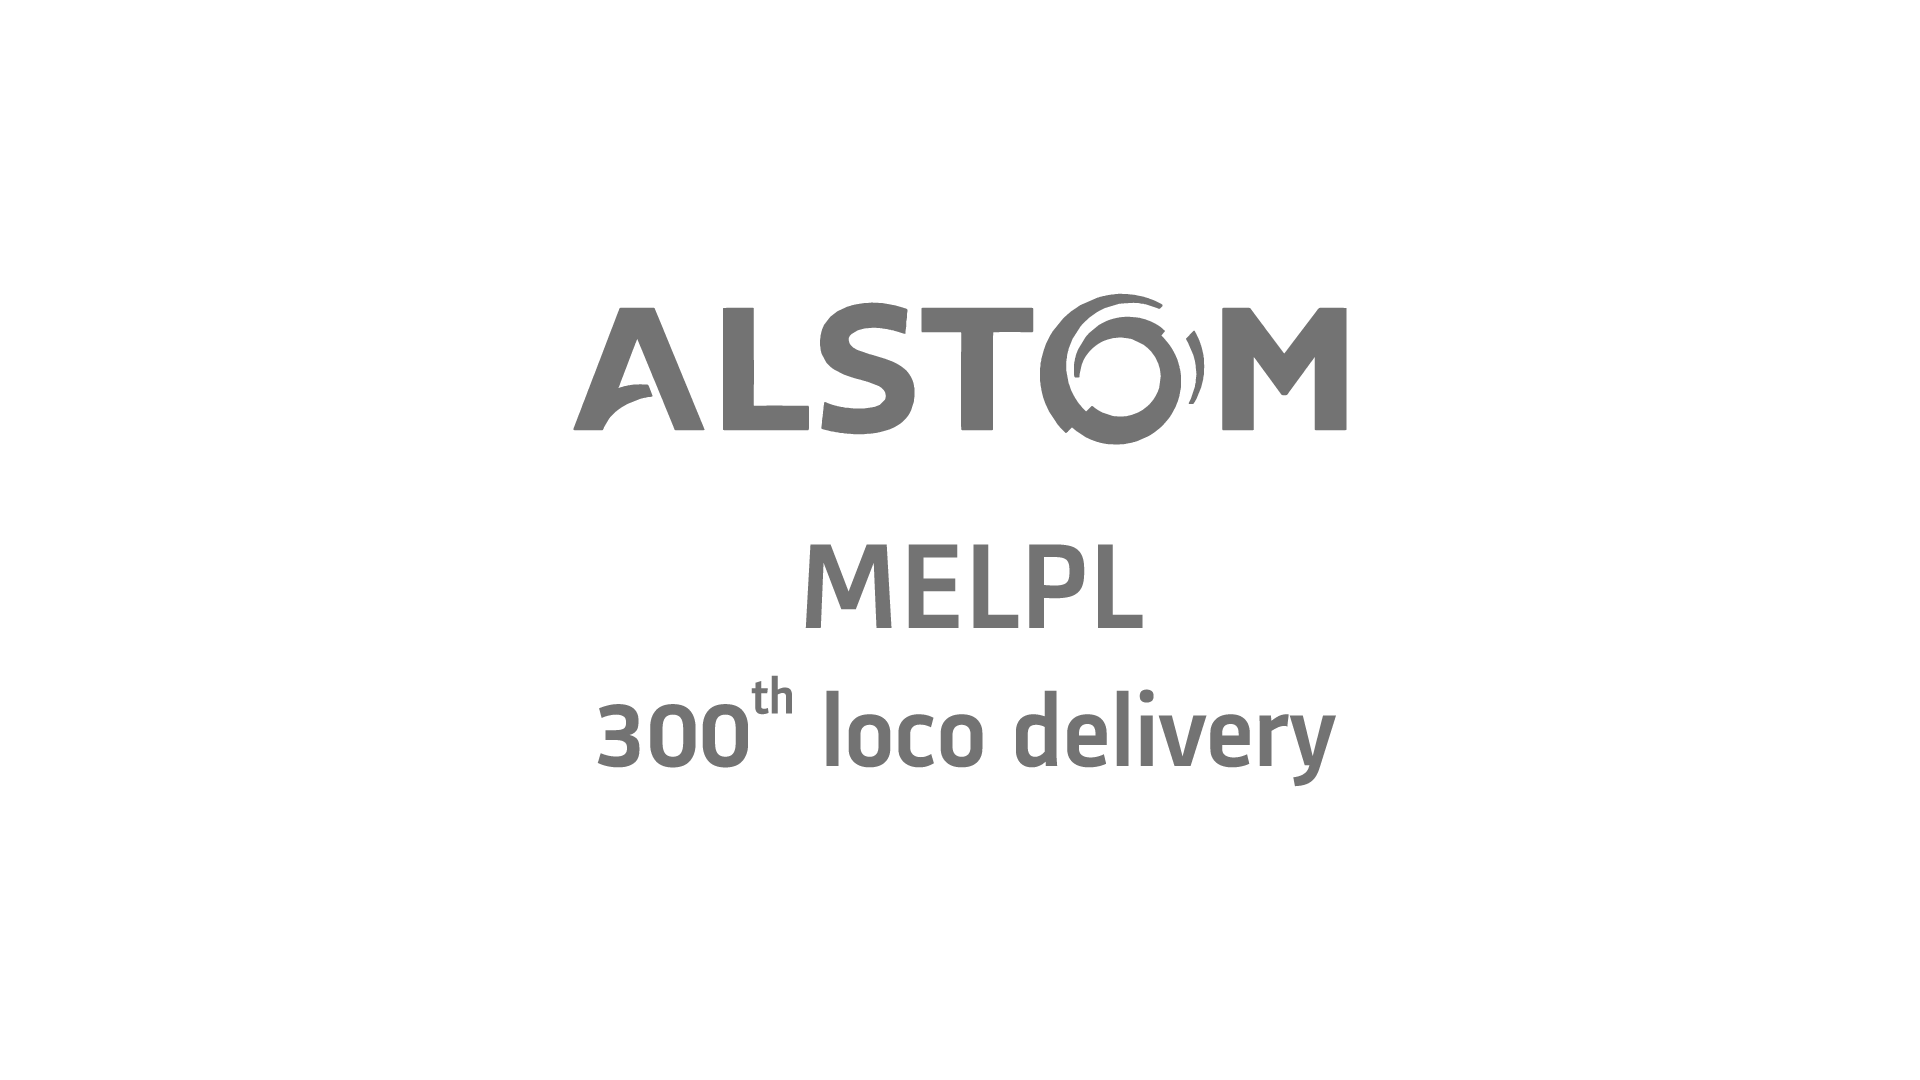 Astom_Meple